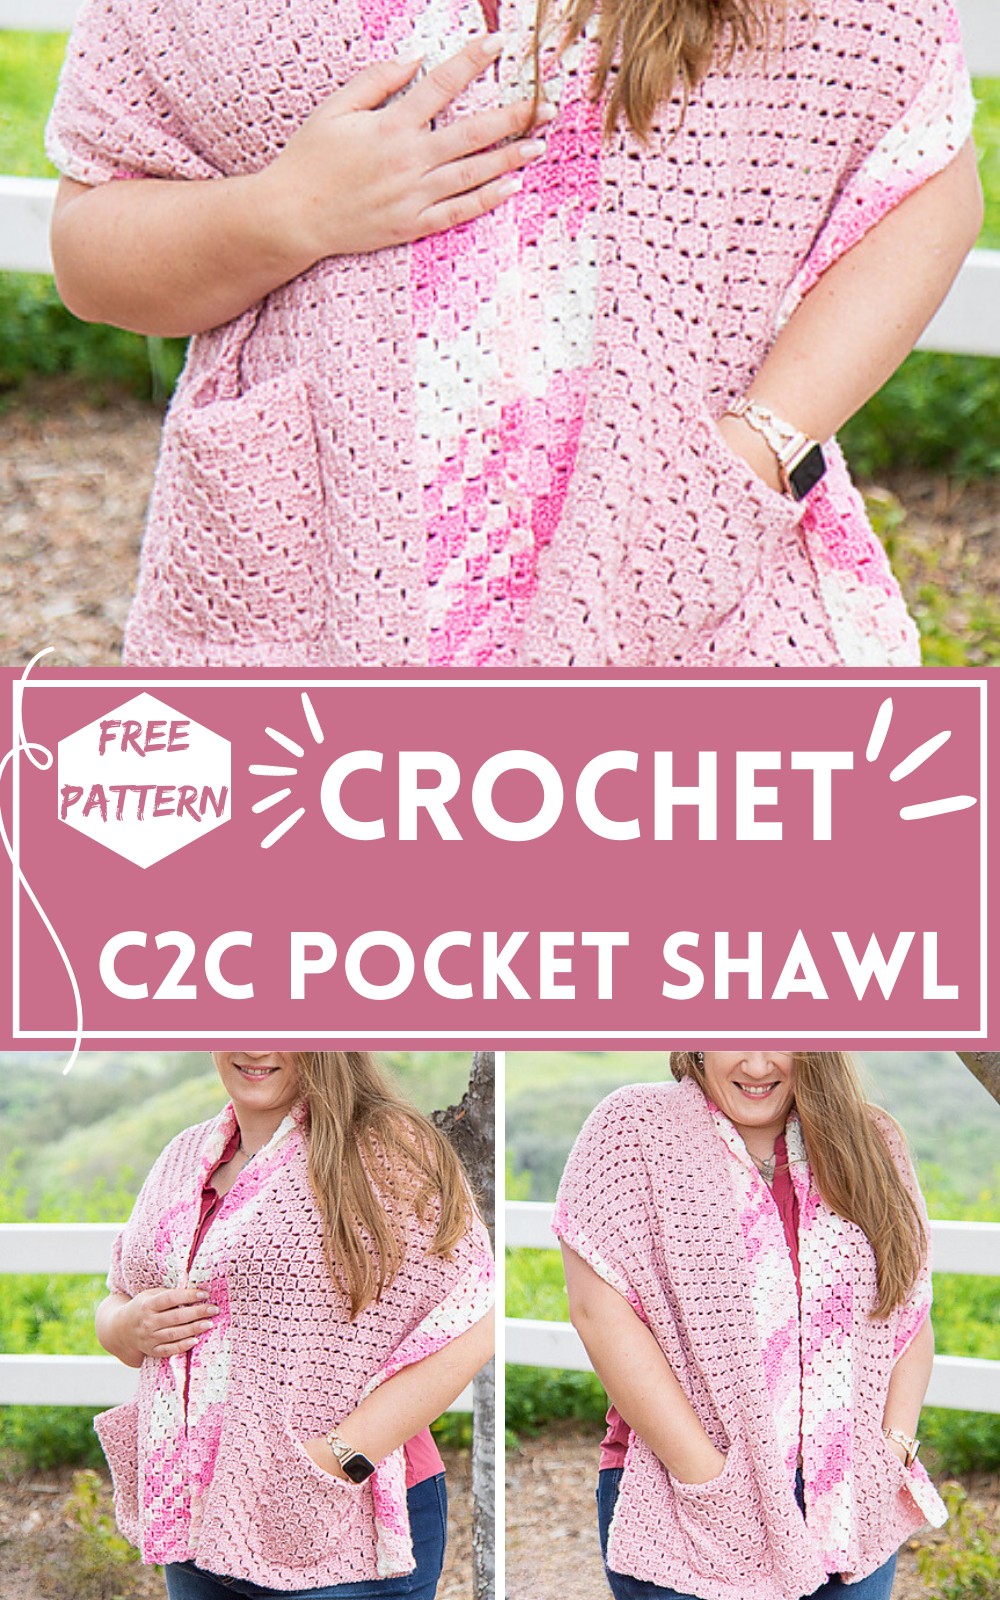 Crochet C2c Pocket Shawl